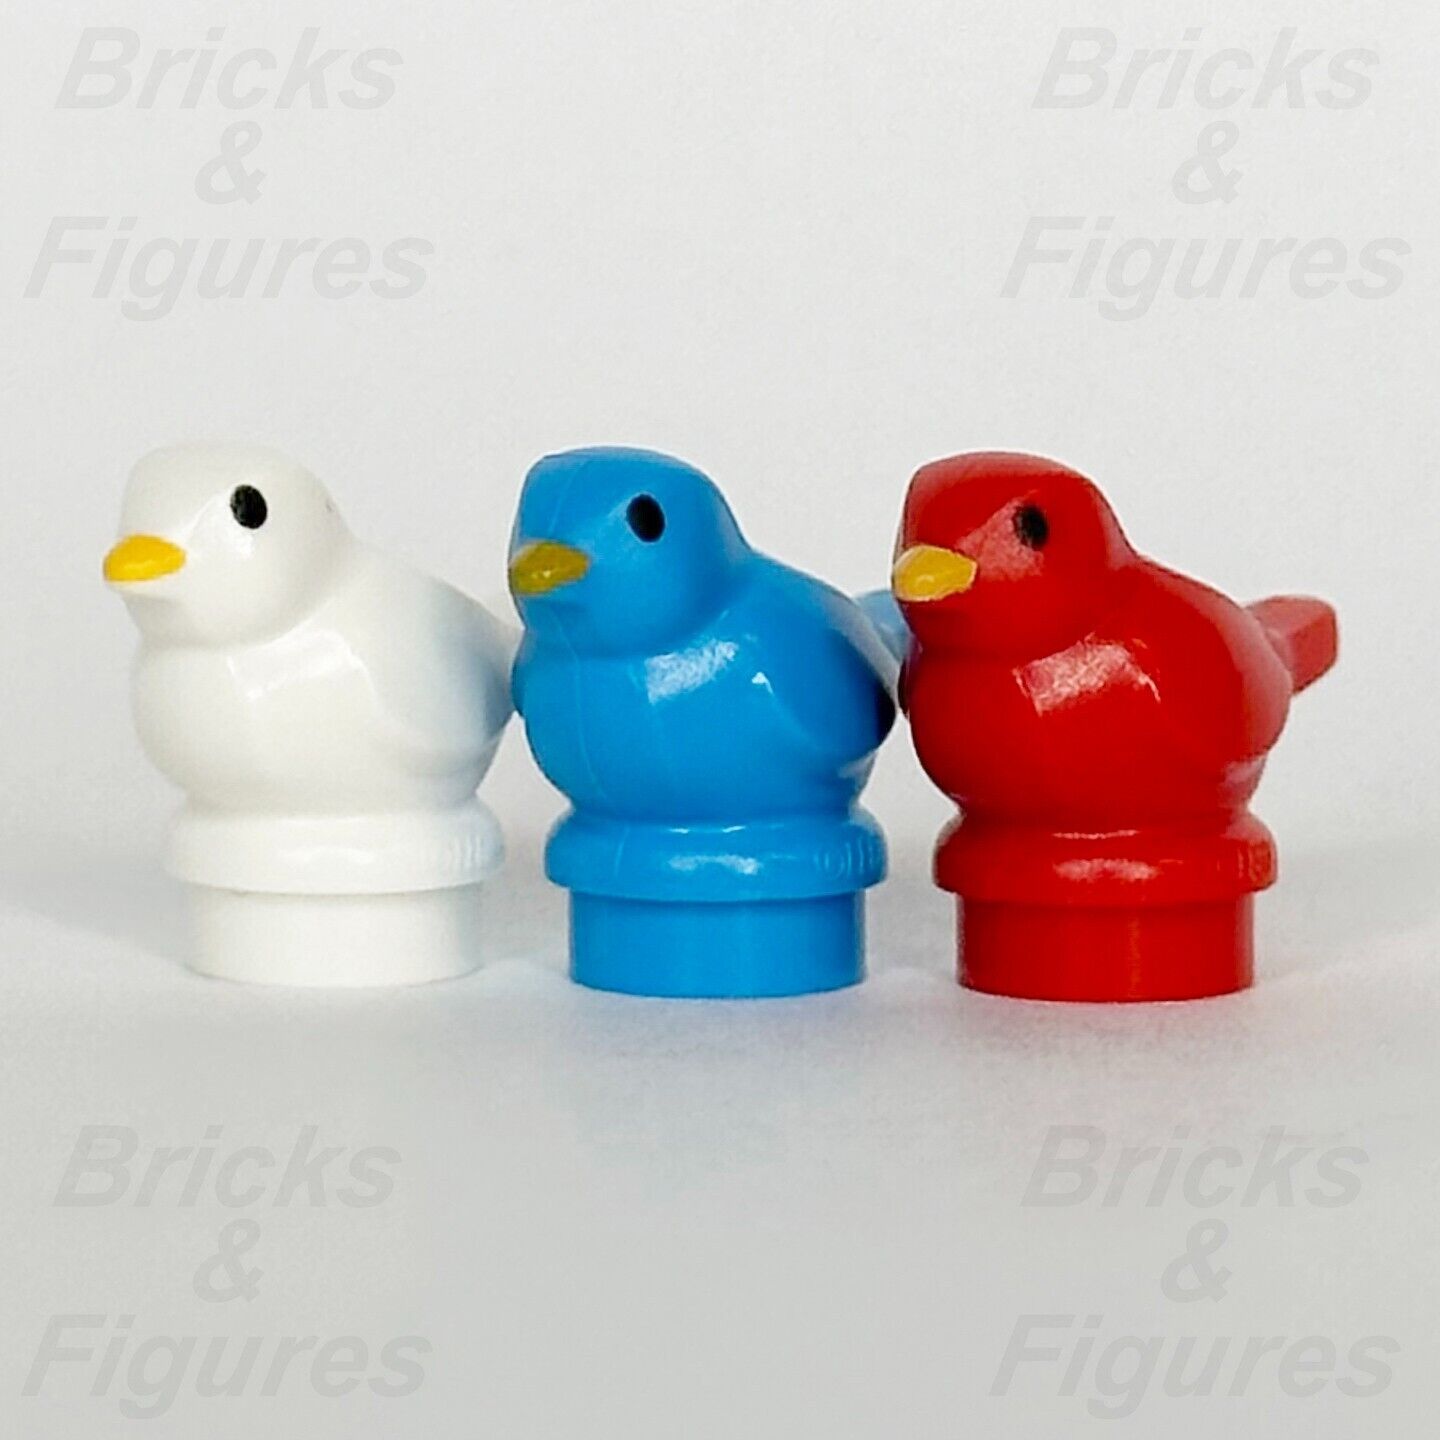 LEGO Small White Blue Red Bird Animal Minifigure Part x 3 Little Birds 41835pb01 - Bricks & Figures